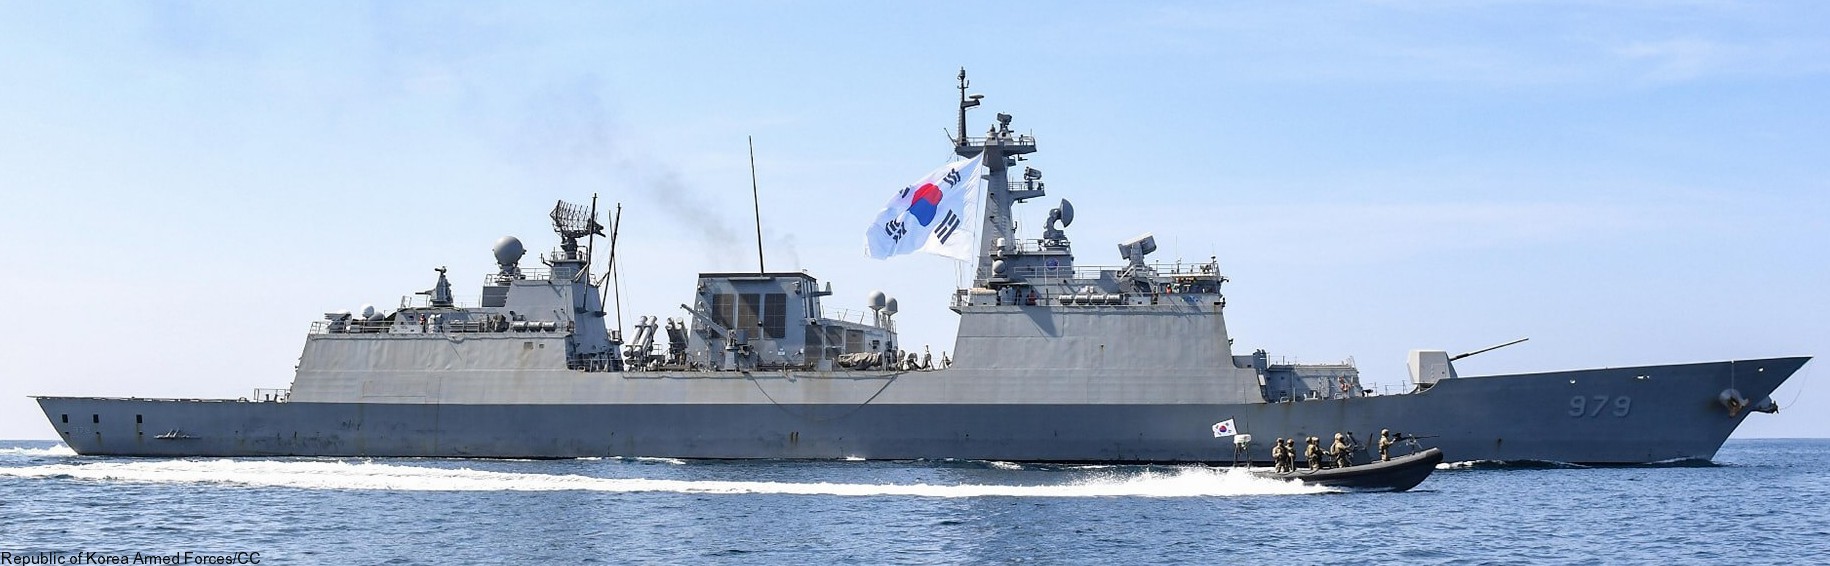 ddh-979 roks gang gam-chan helicopter destroyer ddh kdx-ii korean navy rokn standard sm-2mr sam harpoon ssm 03